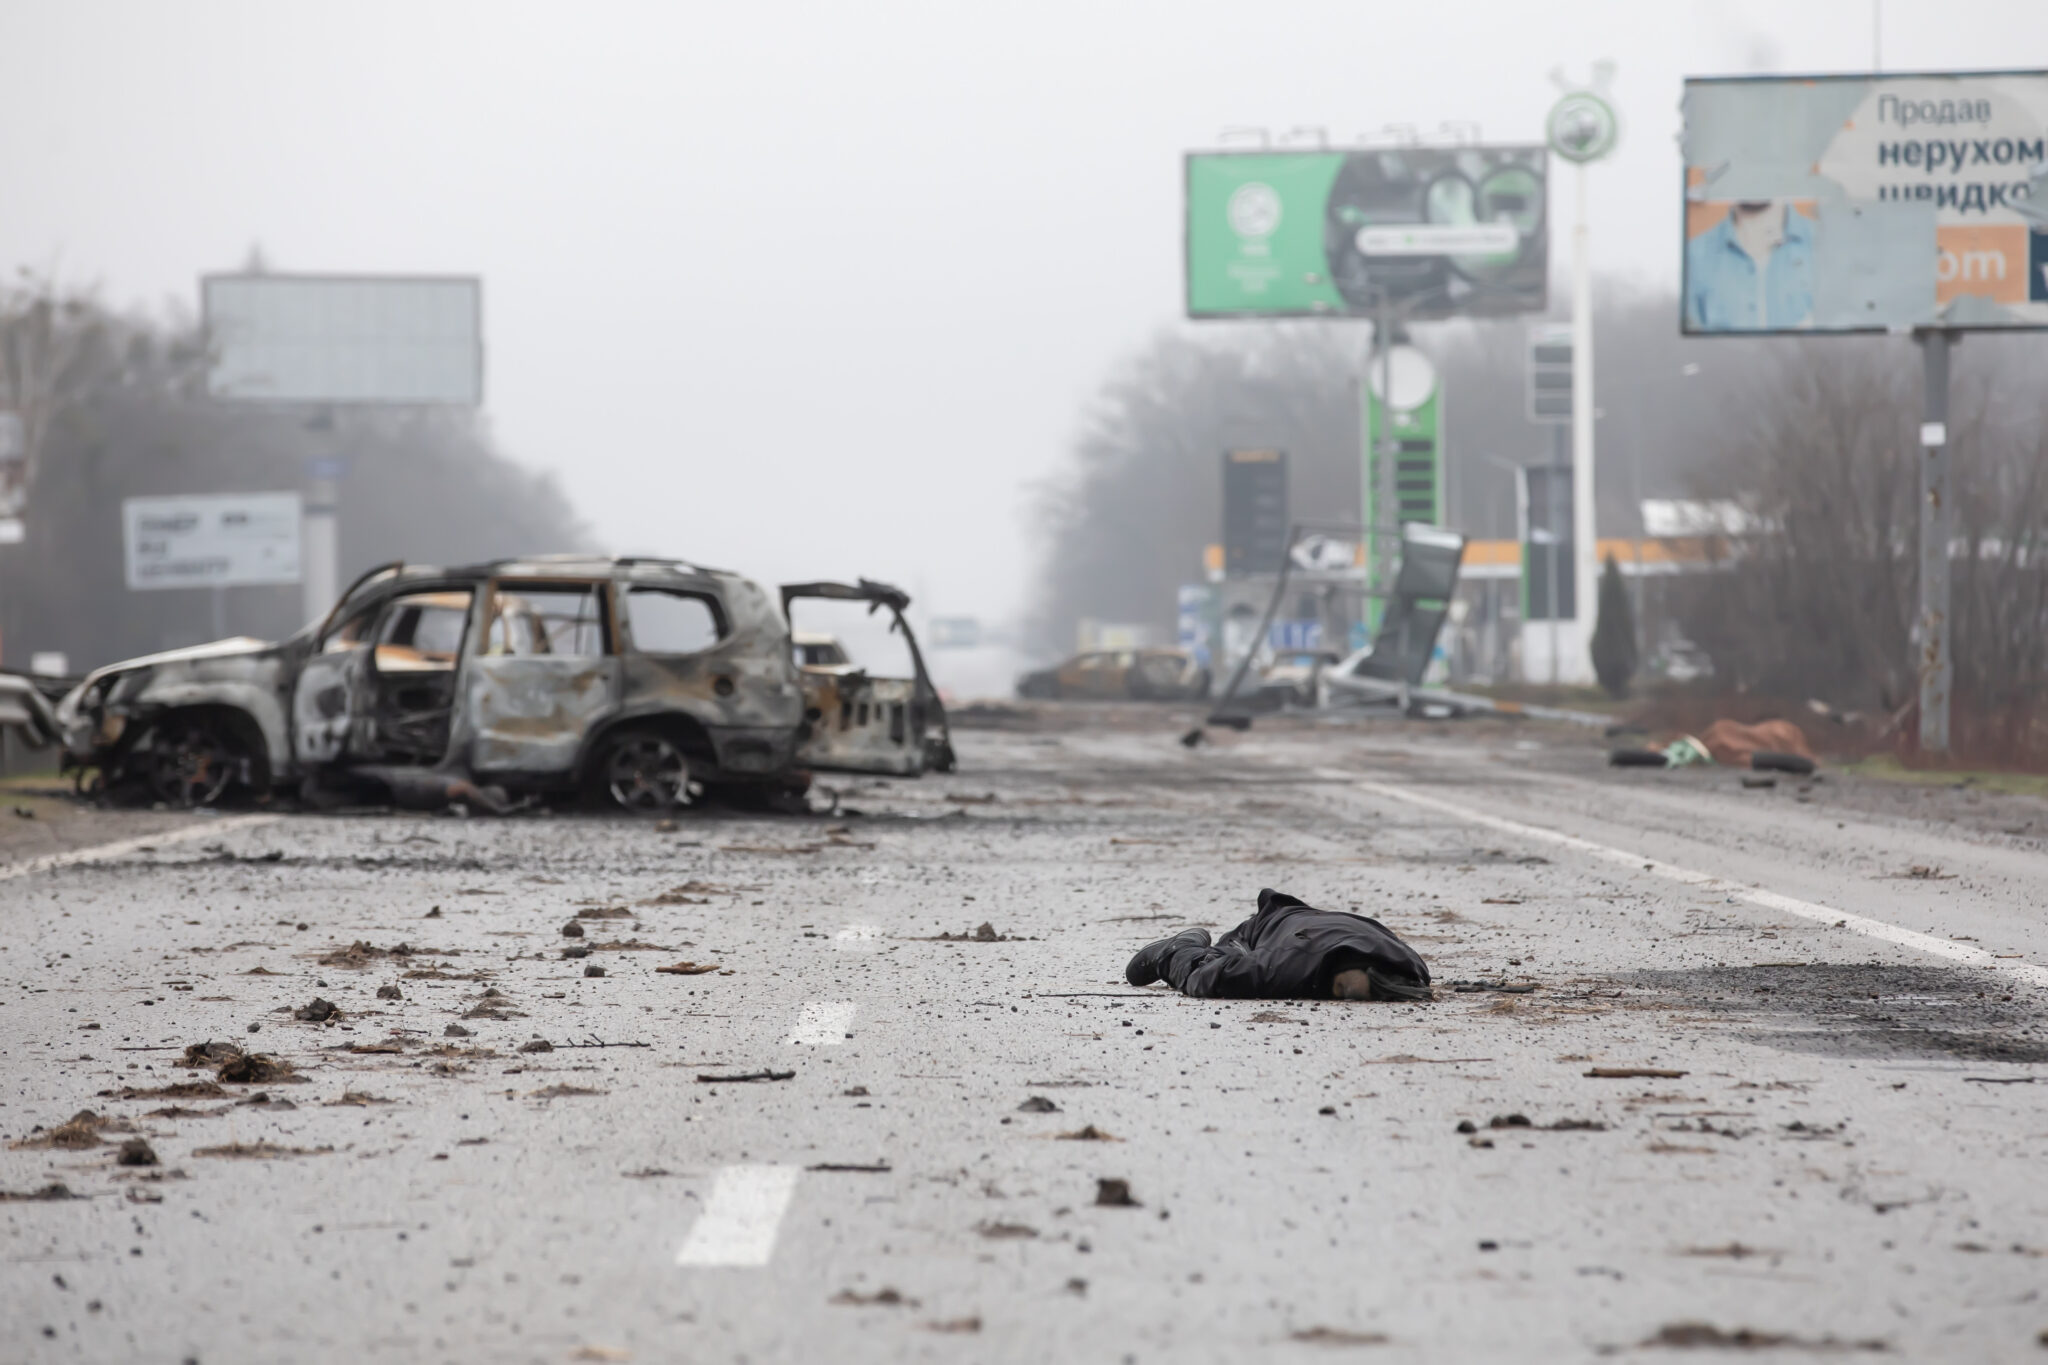 Death On The Highway Between Kyiv And Zhytomyr, Ukraine 02 Apr 2022